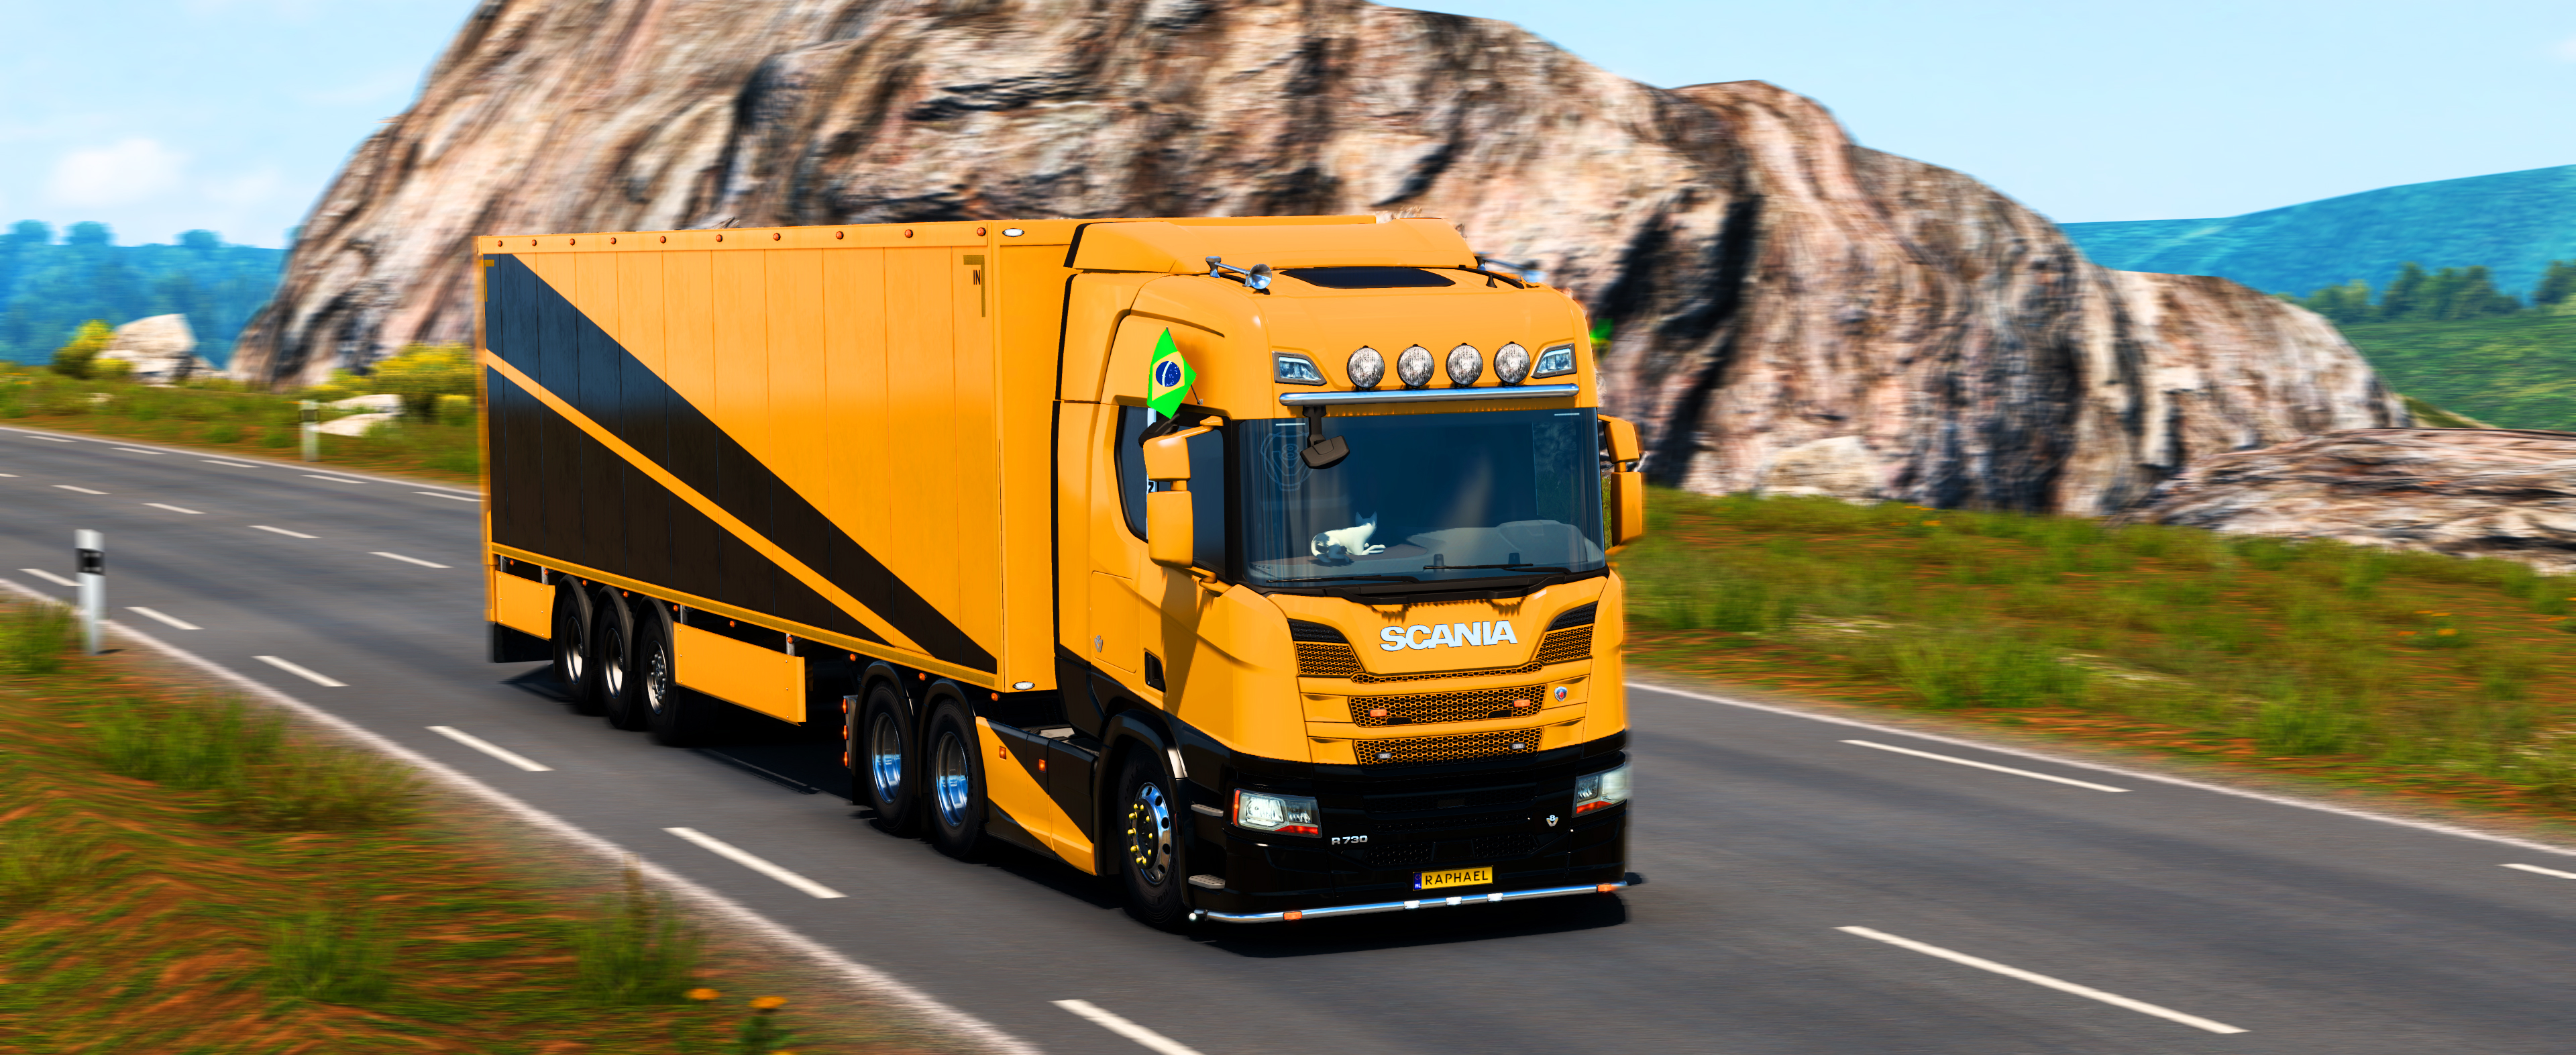 Spain Road VTC FBTC Scania Euro Truck Simulator 2 SCS Software DLC Iberia Landscape Truck Video Game 3840x1572